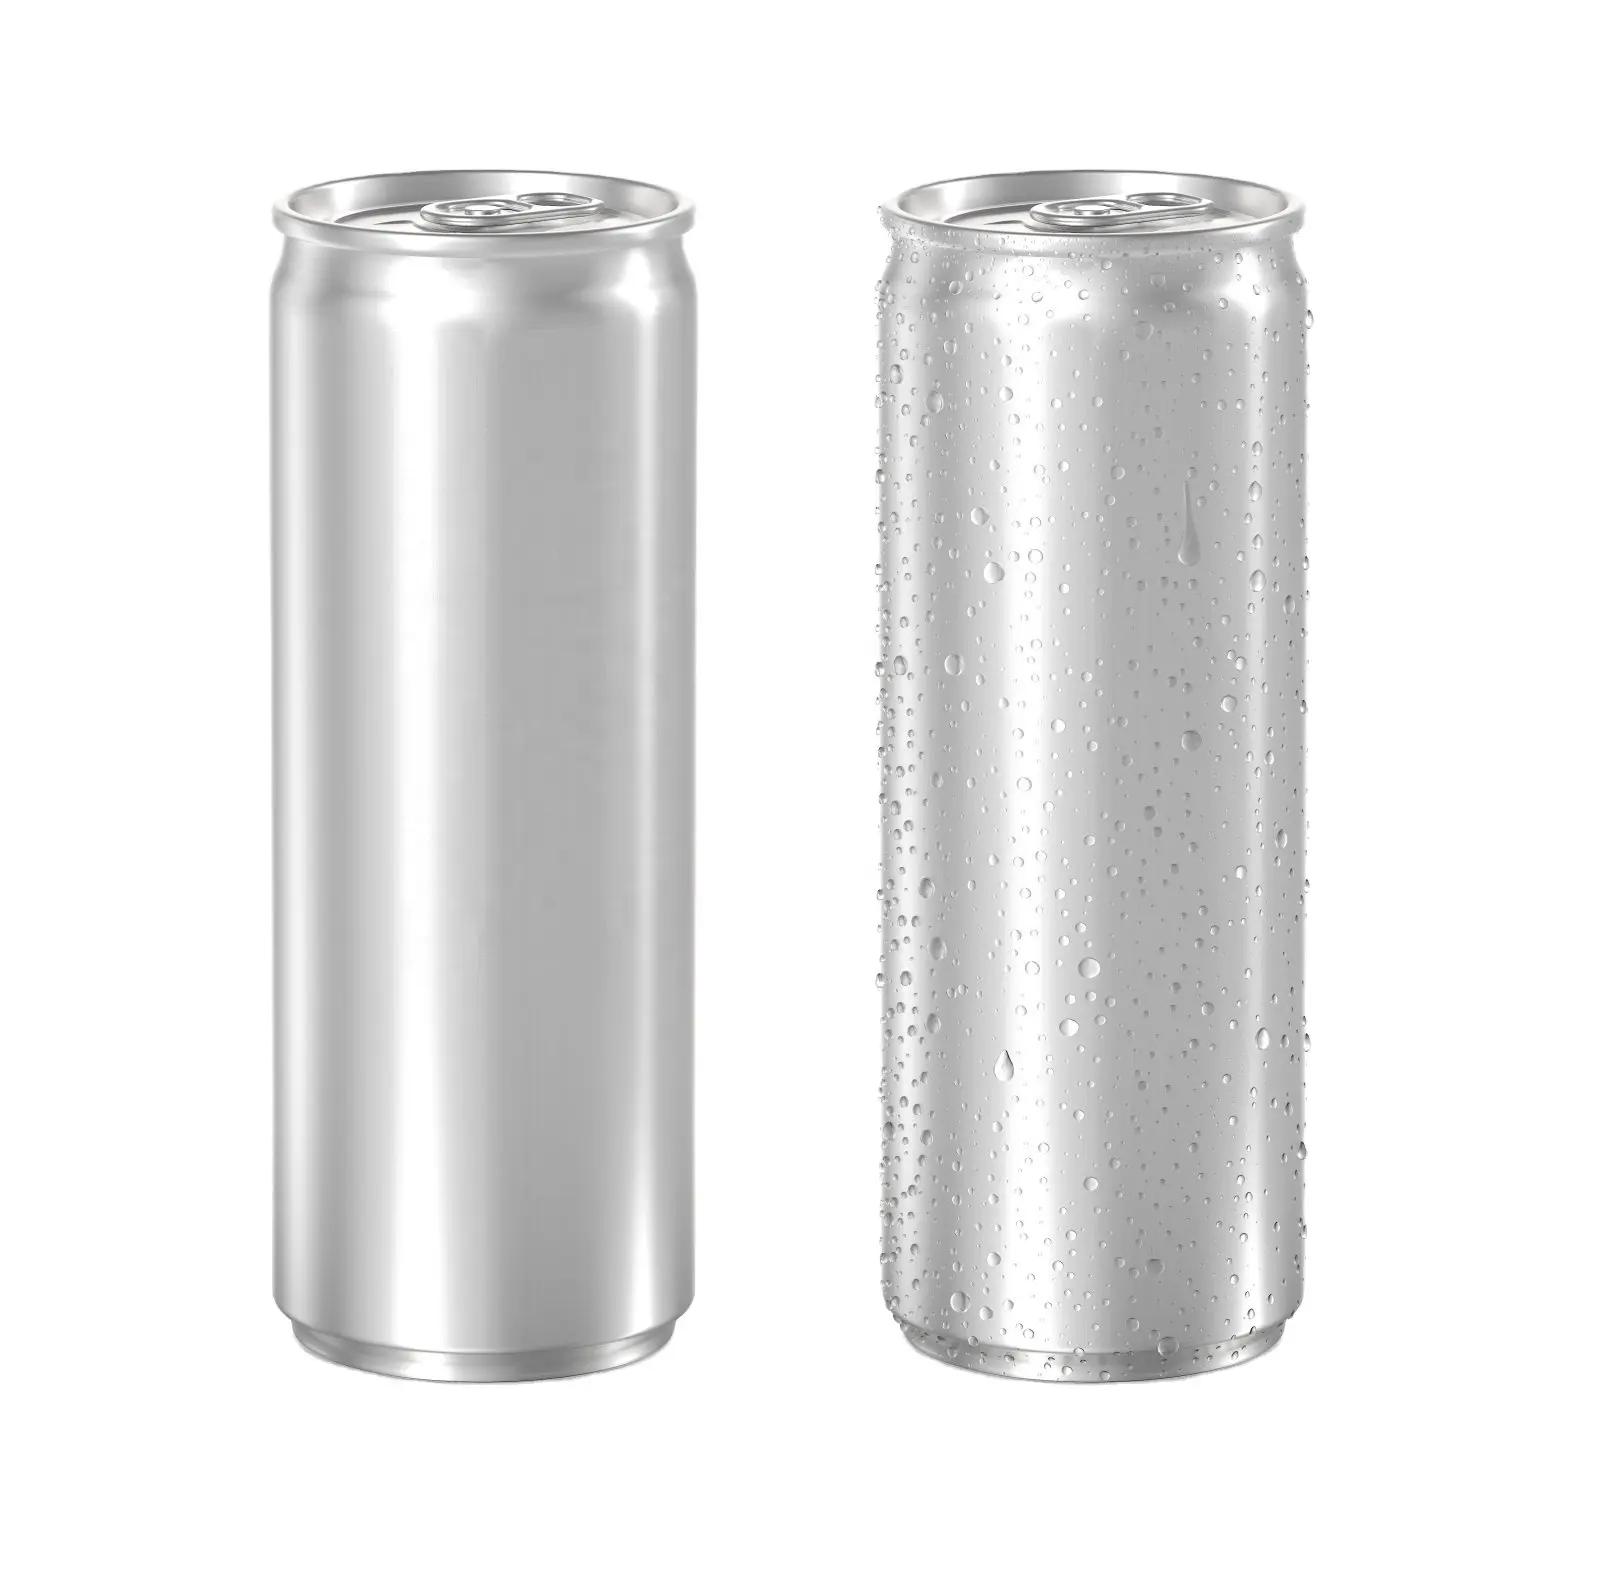 Kaleng Tipis Kosong 5133 #250Ml, Kaleng Aluminium 250Ml Ramping, Kaleng Terbuka Mudah Aluminium untuk Minuman Ringan,